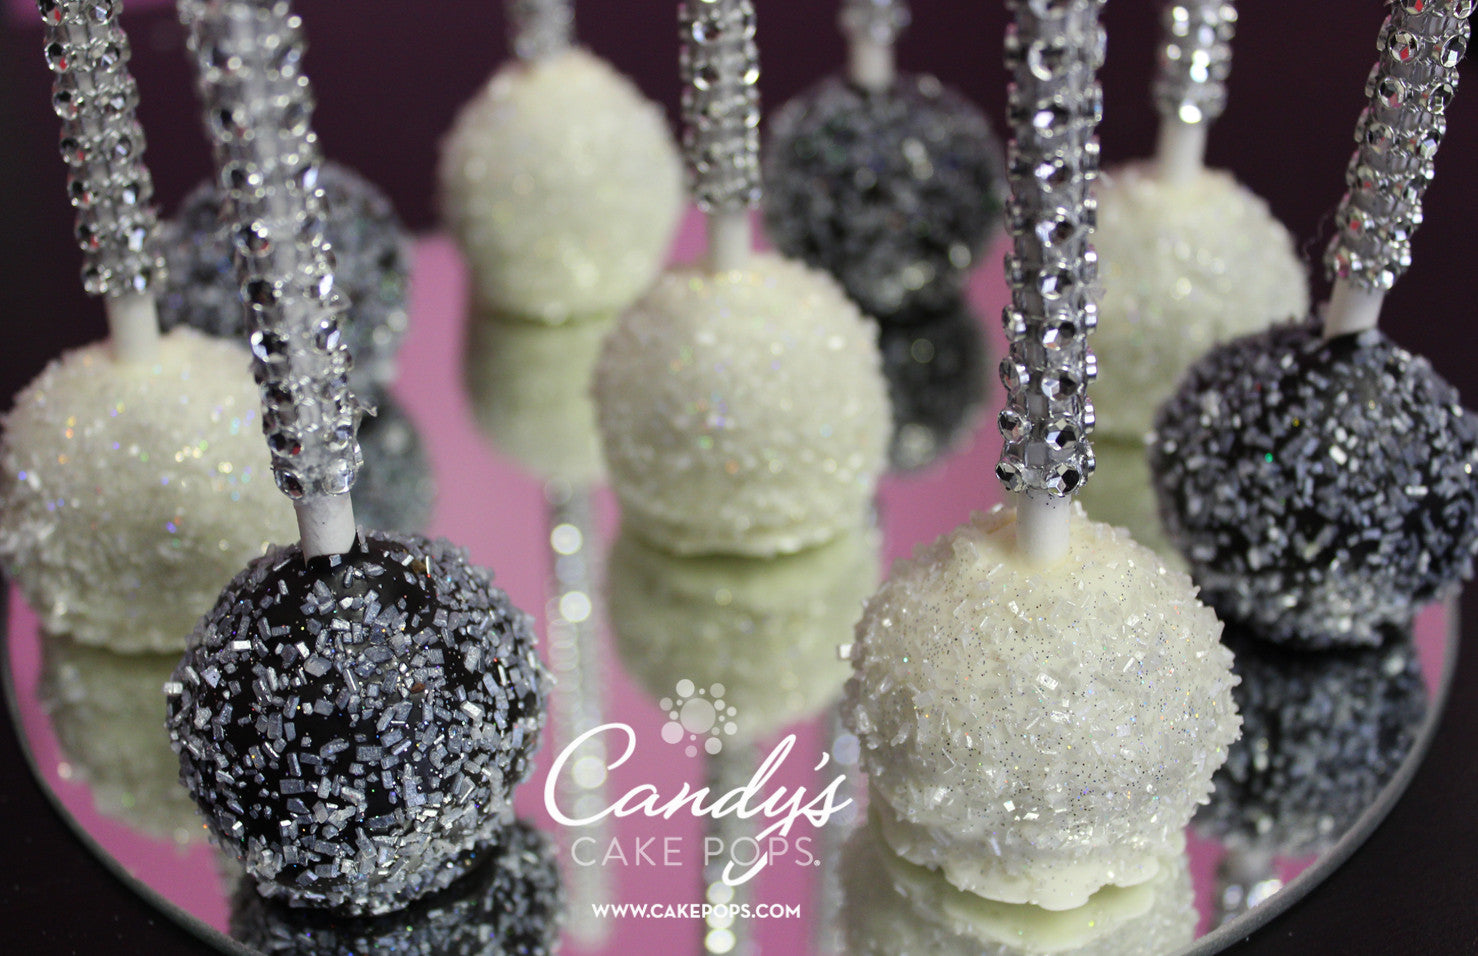 Custom Color Cake Pops with Bling Sticks (Silver Bling or Gold Bling Stick option) - Candy's Cake Pops